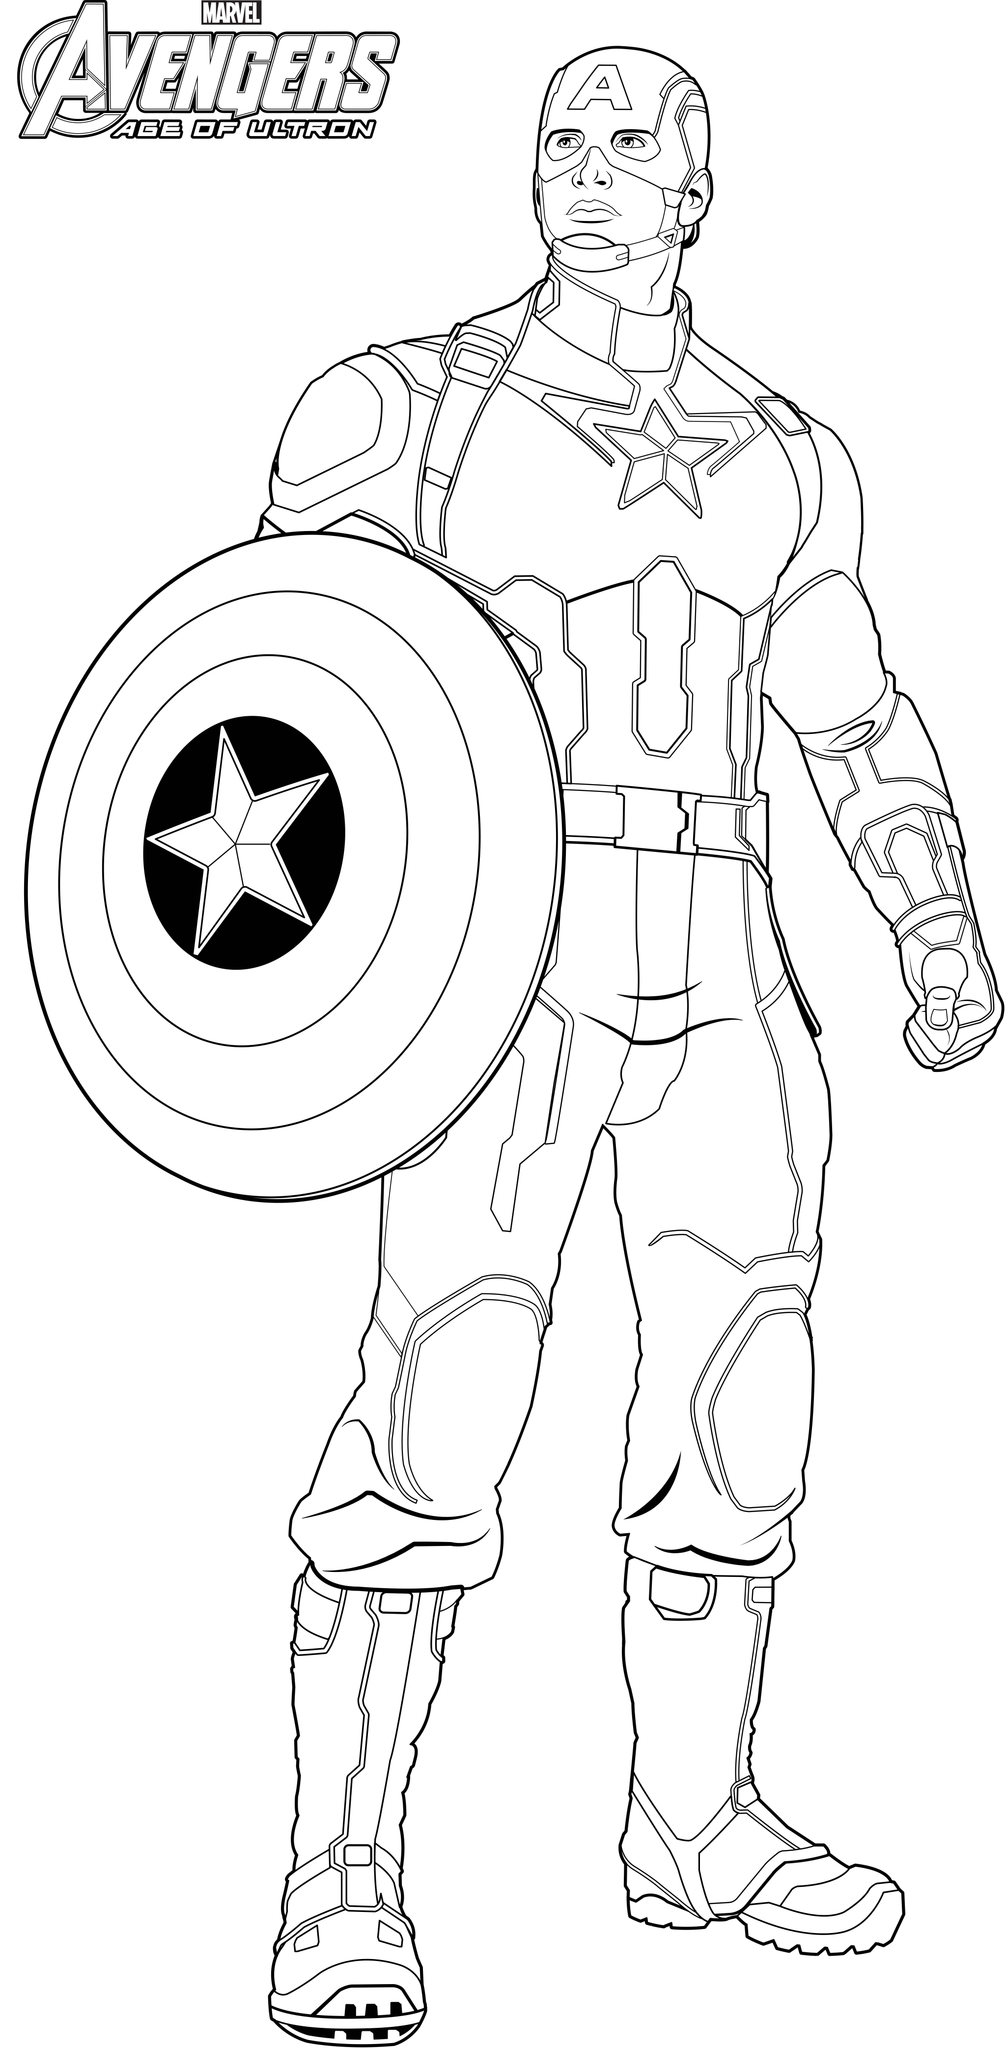 Герои Марвел раскраска Капитан Америка